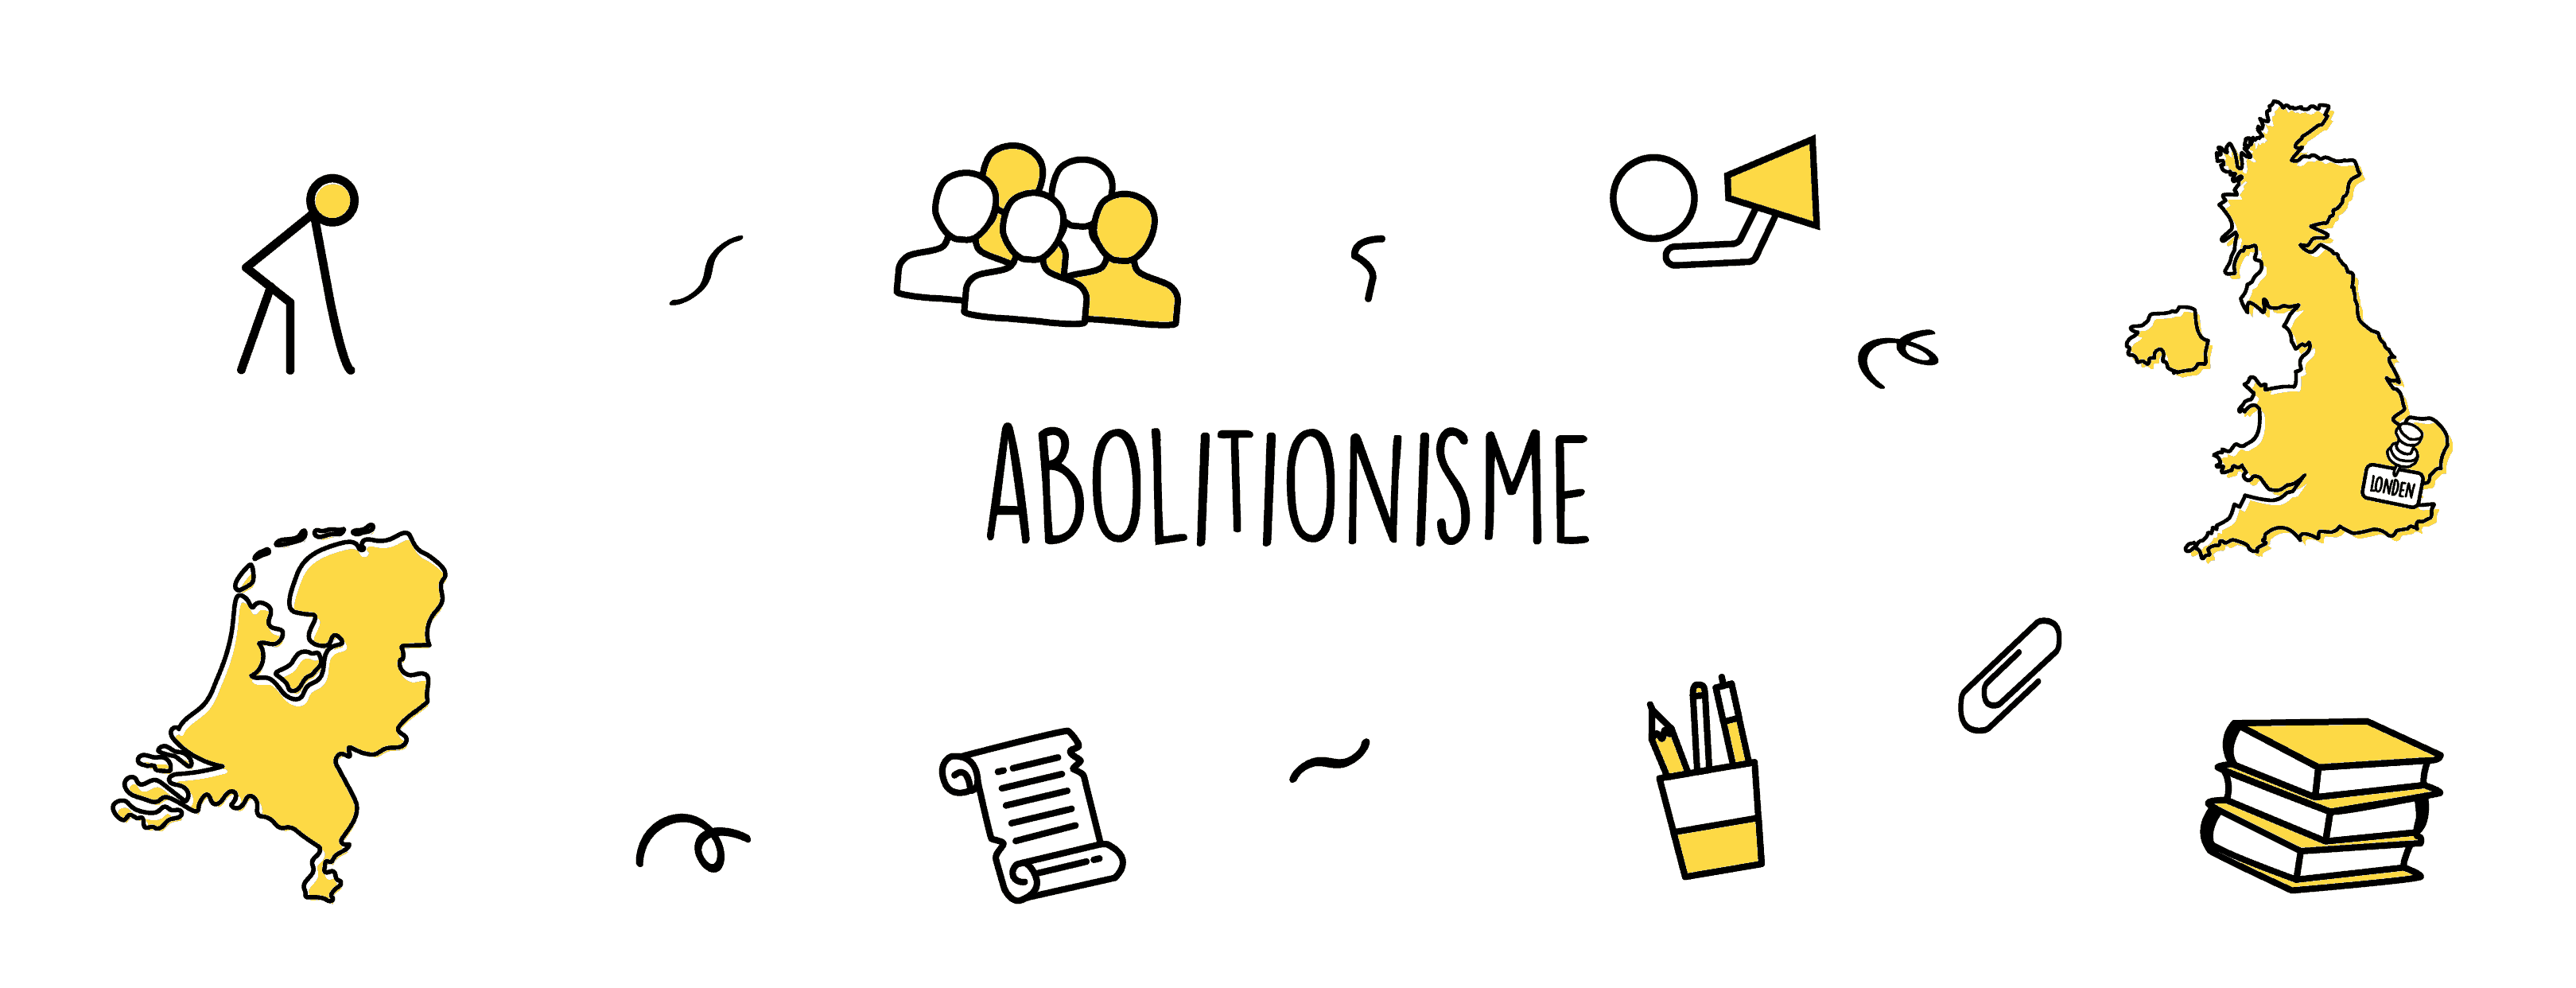 abolitionisme